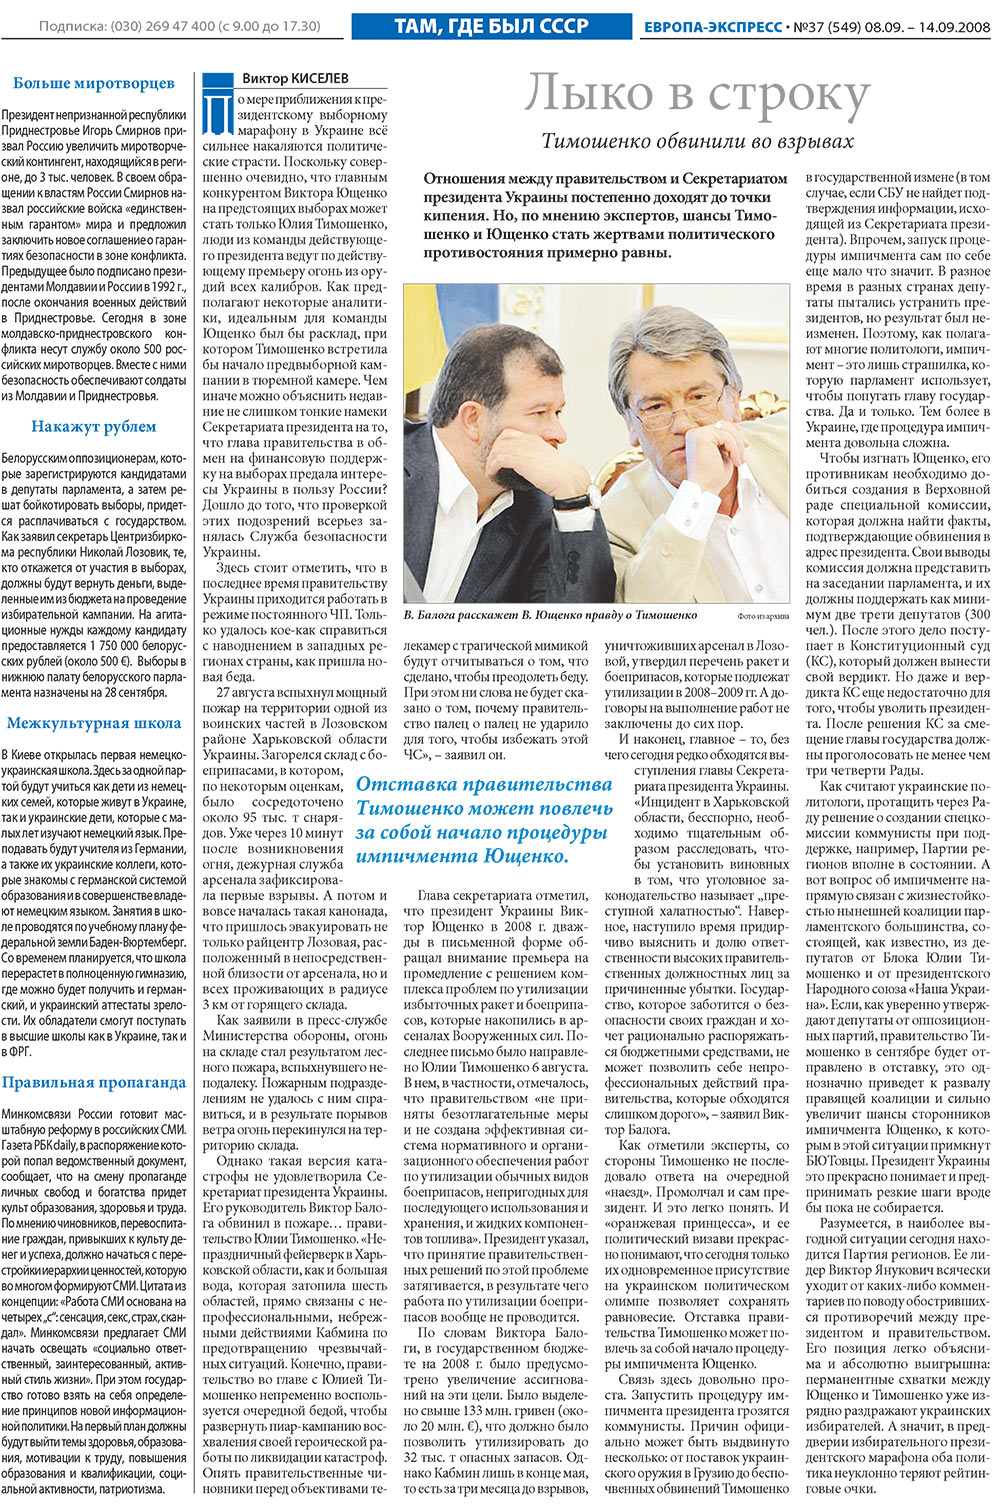 Европа экспресс, газета. 2008 №37 стр.14